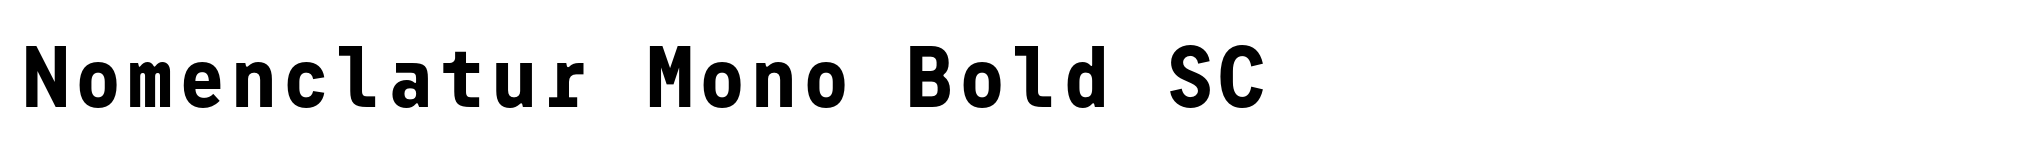 Nomenclatur Mono Bold SC image